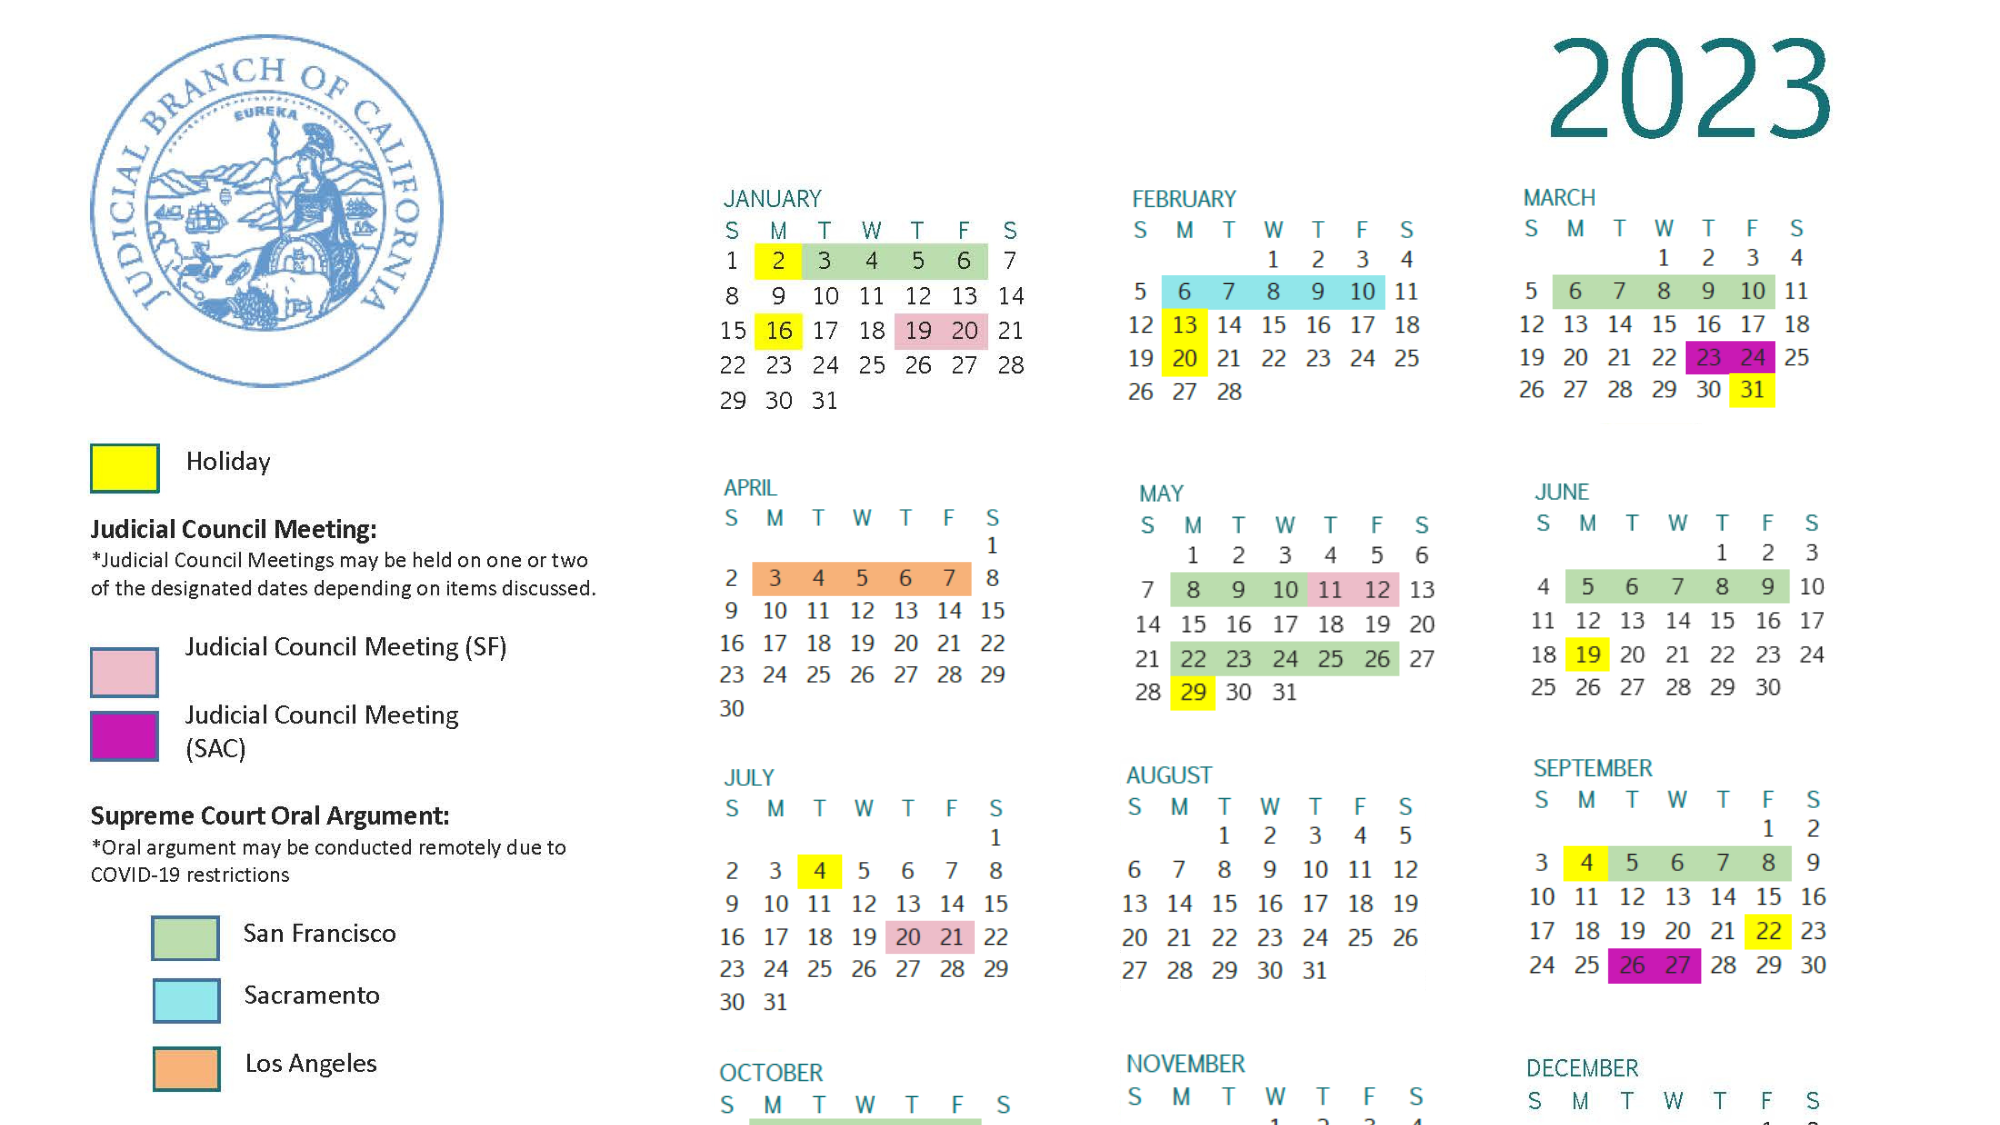 Judicial Council Calendar for 2023